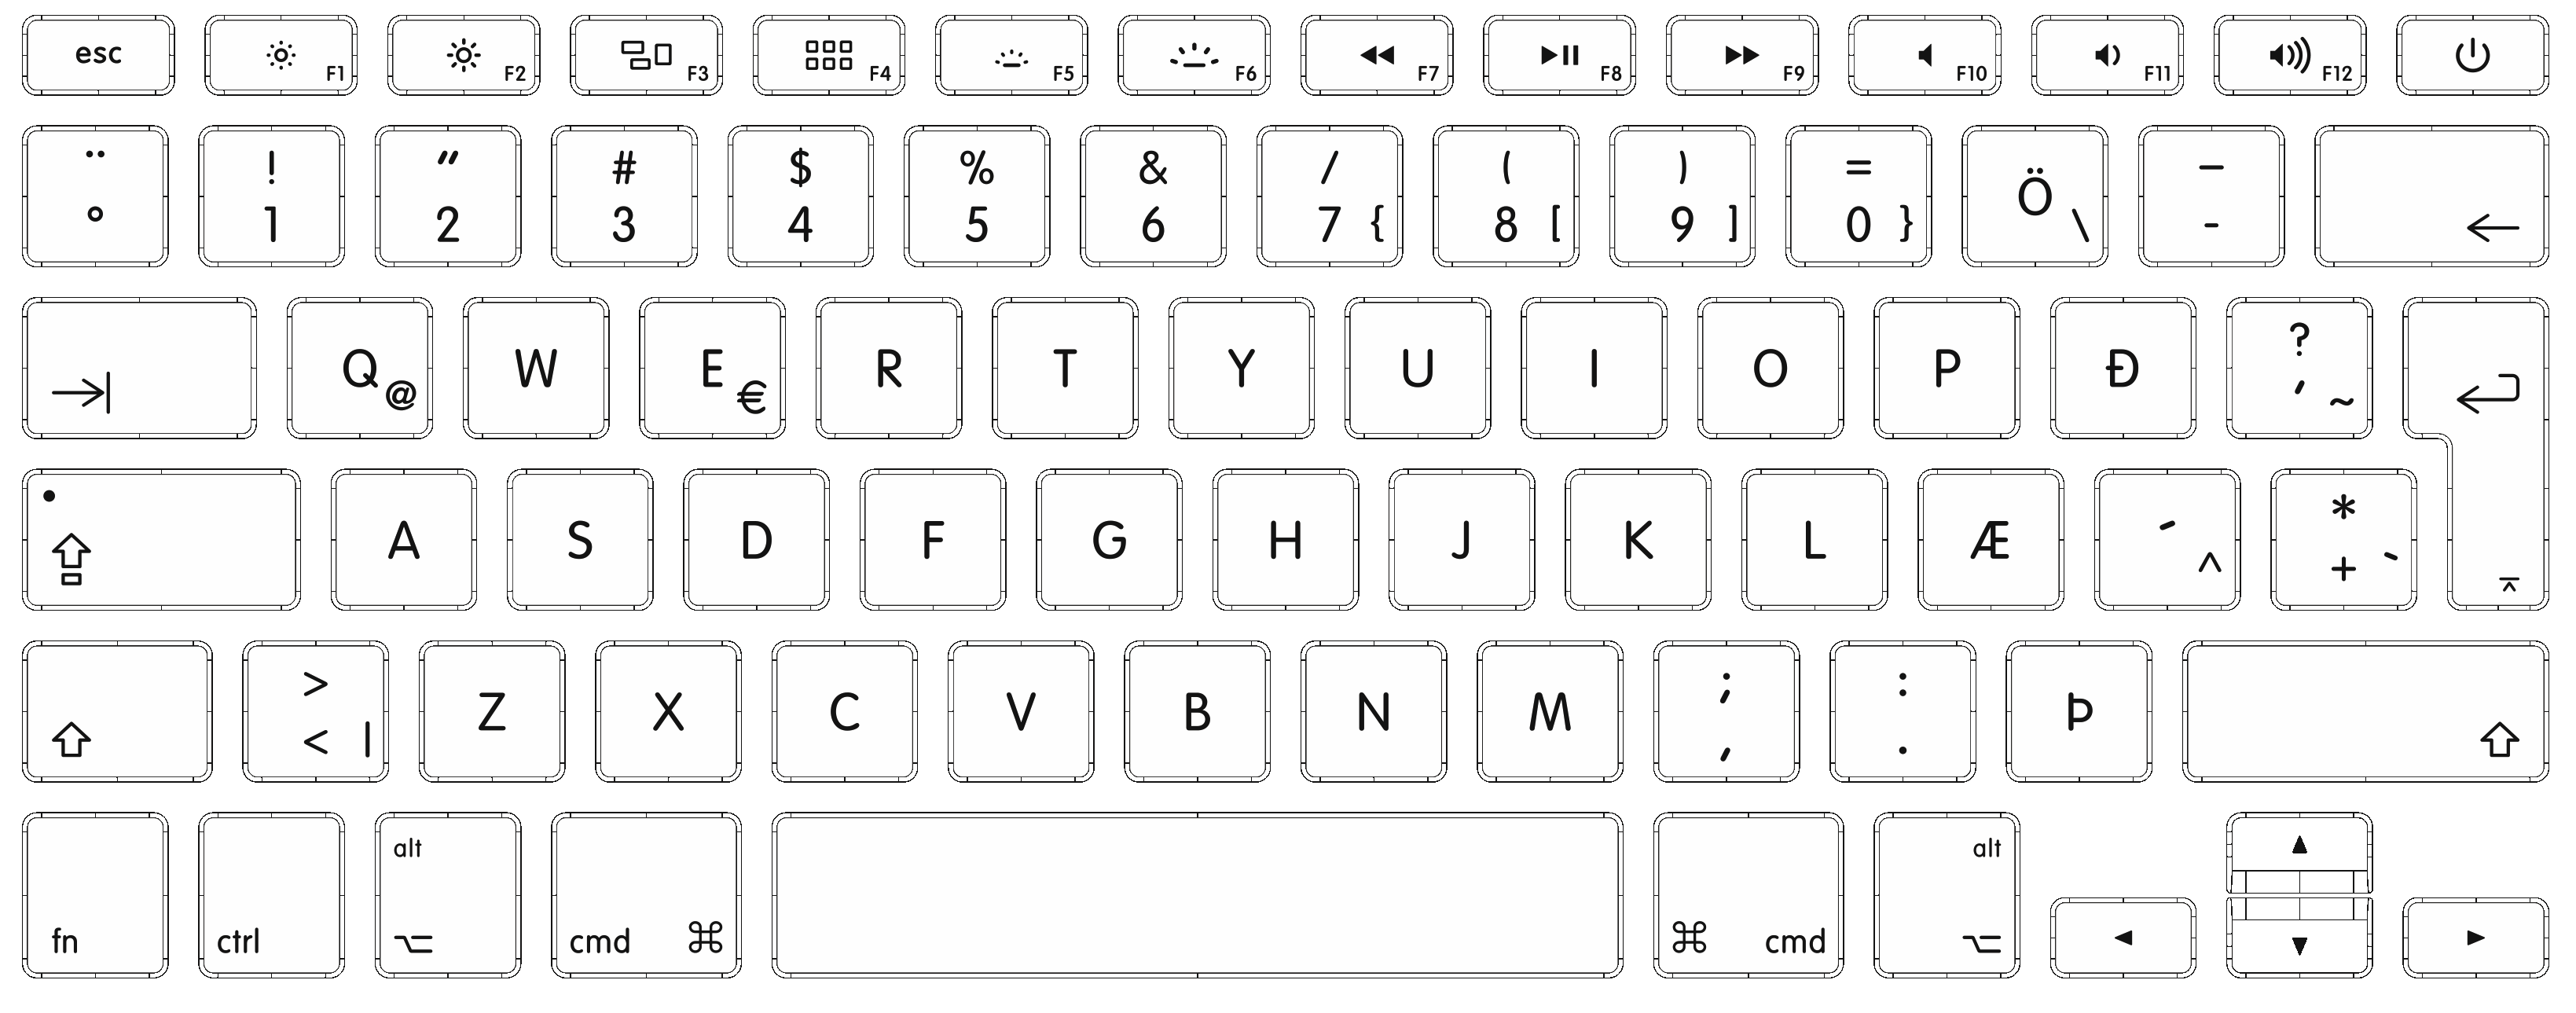 mac vs windows keyboard layout